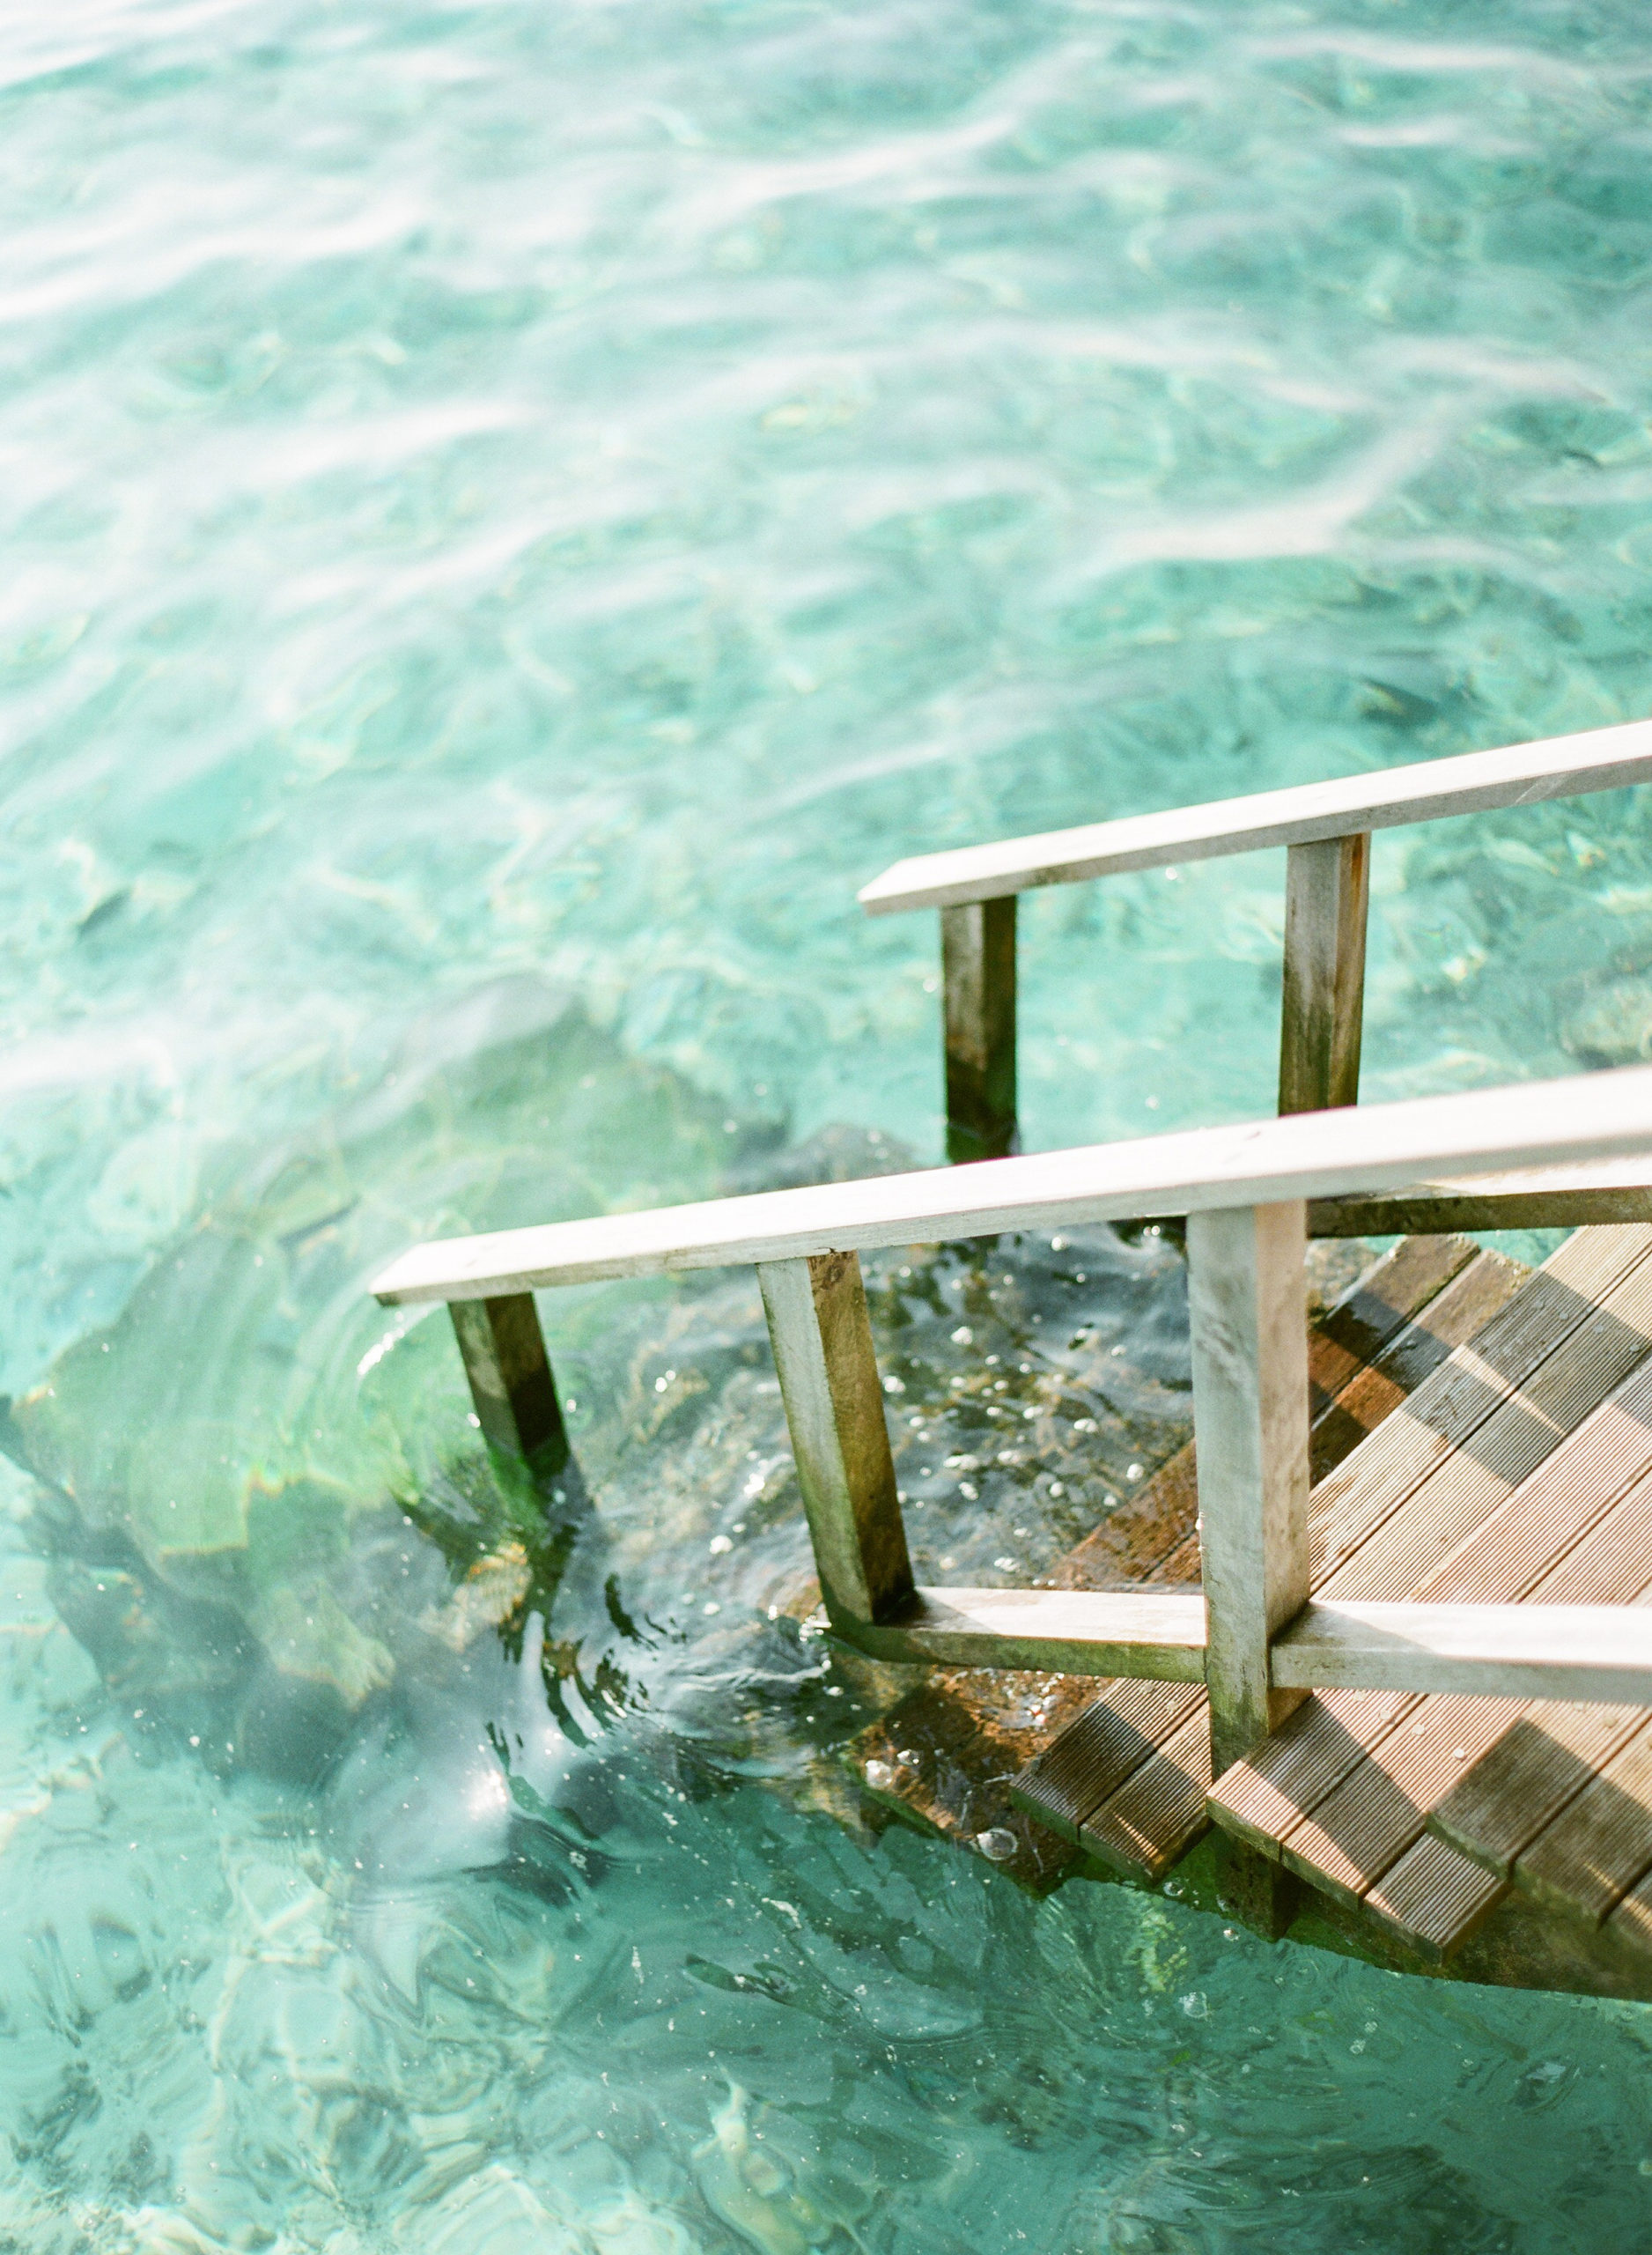 Wooden ladder descending into water; Maldives